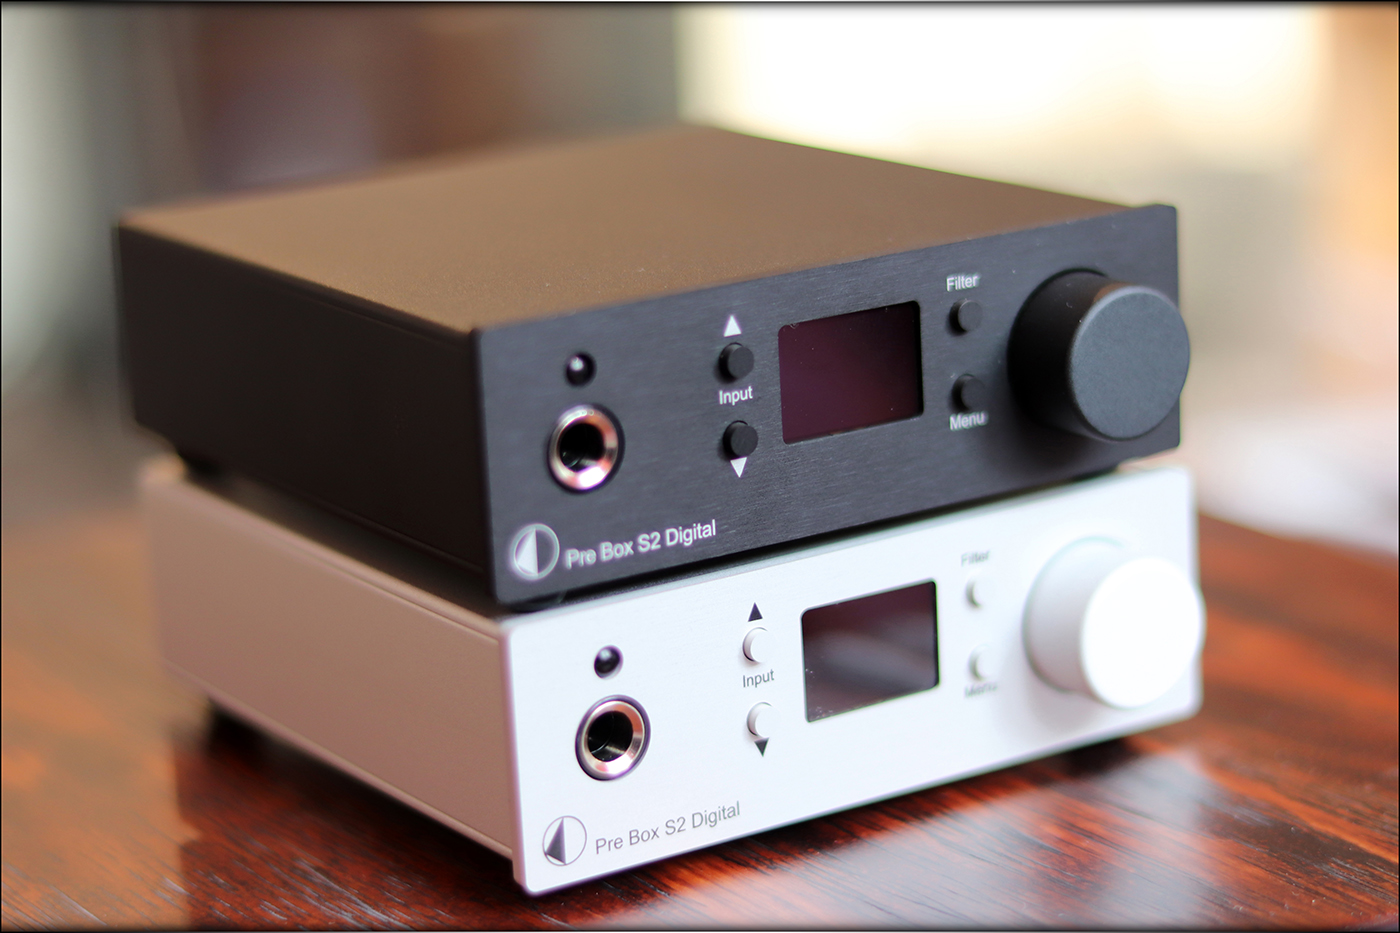 Pro-Ject-Pre-Box-S2-Digital-DAC-AMP-Headphone-Desktop-Audiophile-Heaven-Review-35.jpg